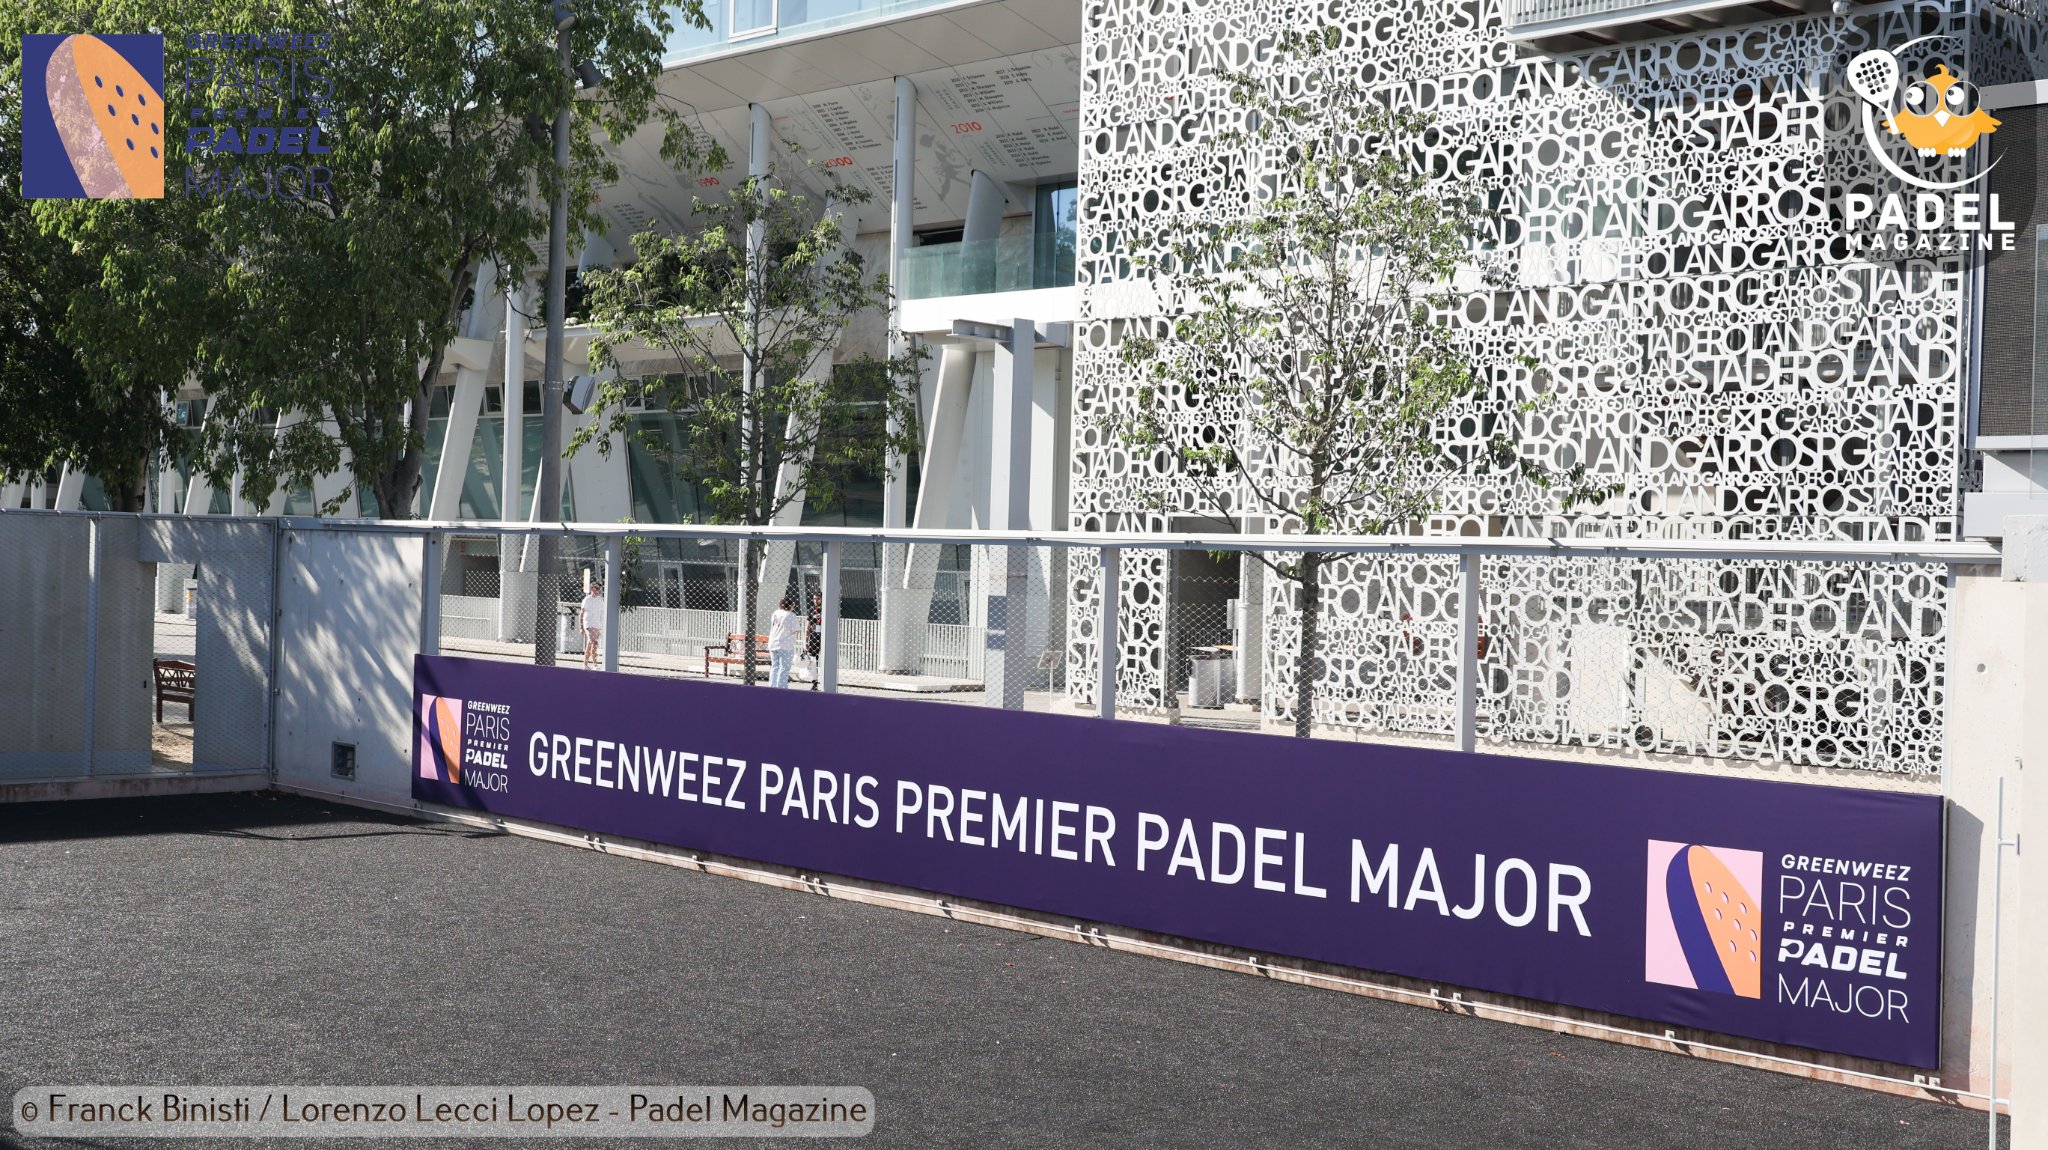 Greenweez Paris Premier Padel Major : Quartalsergebnisse